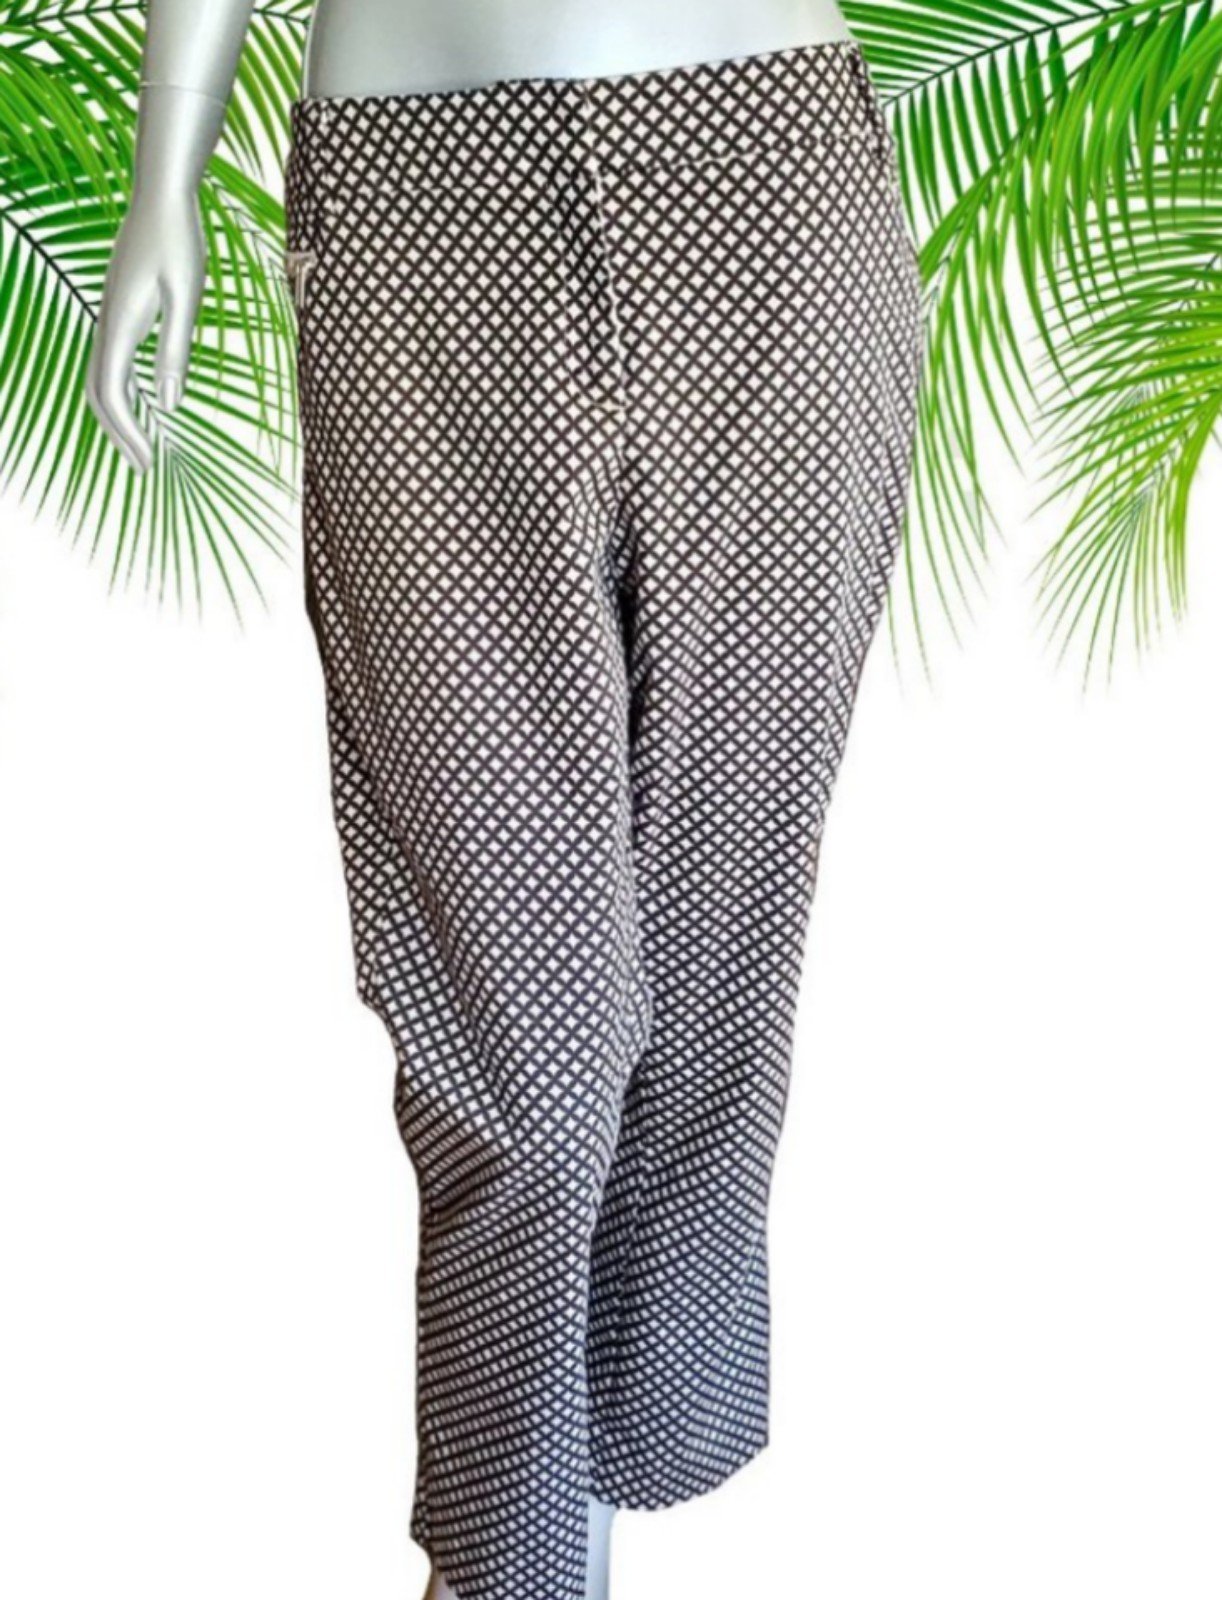 Elegant Women Cropped Pants hobZ6OFH3 US Sale